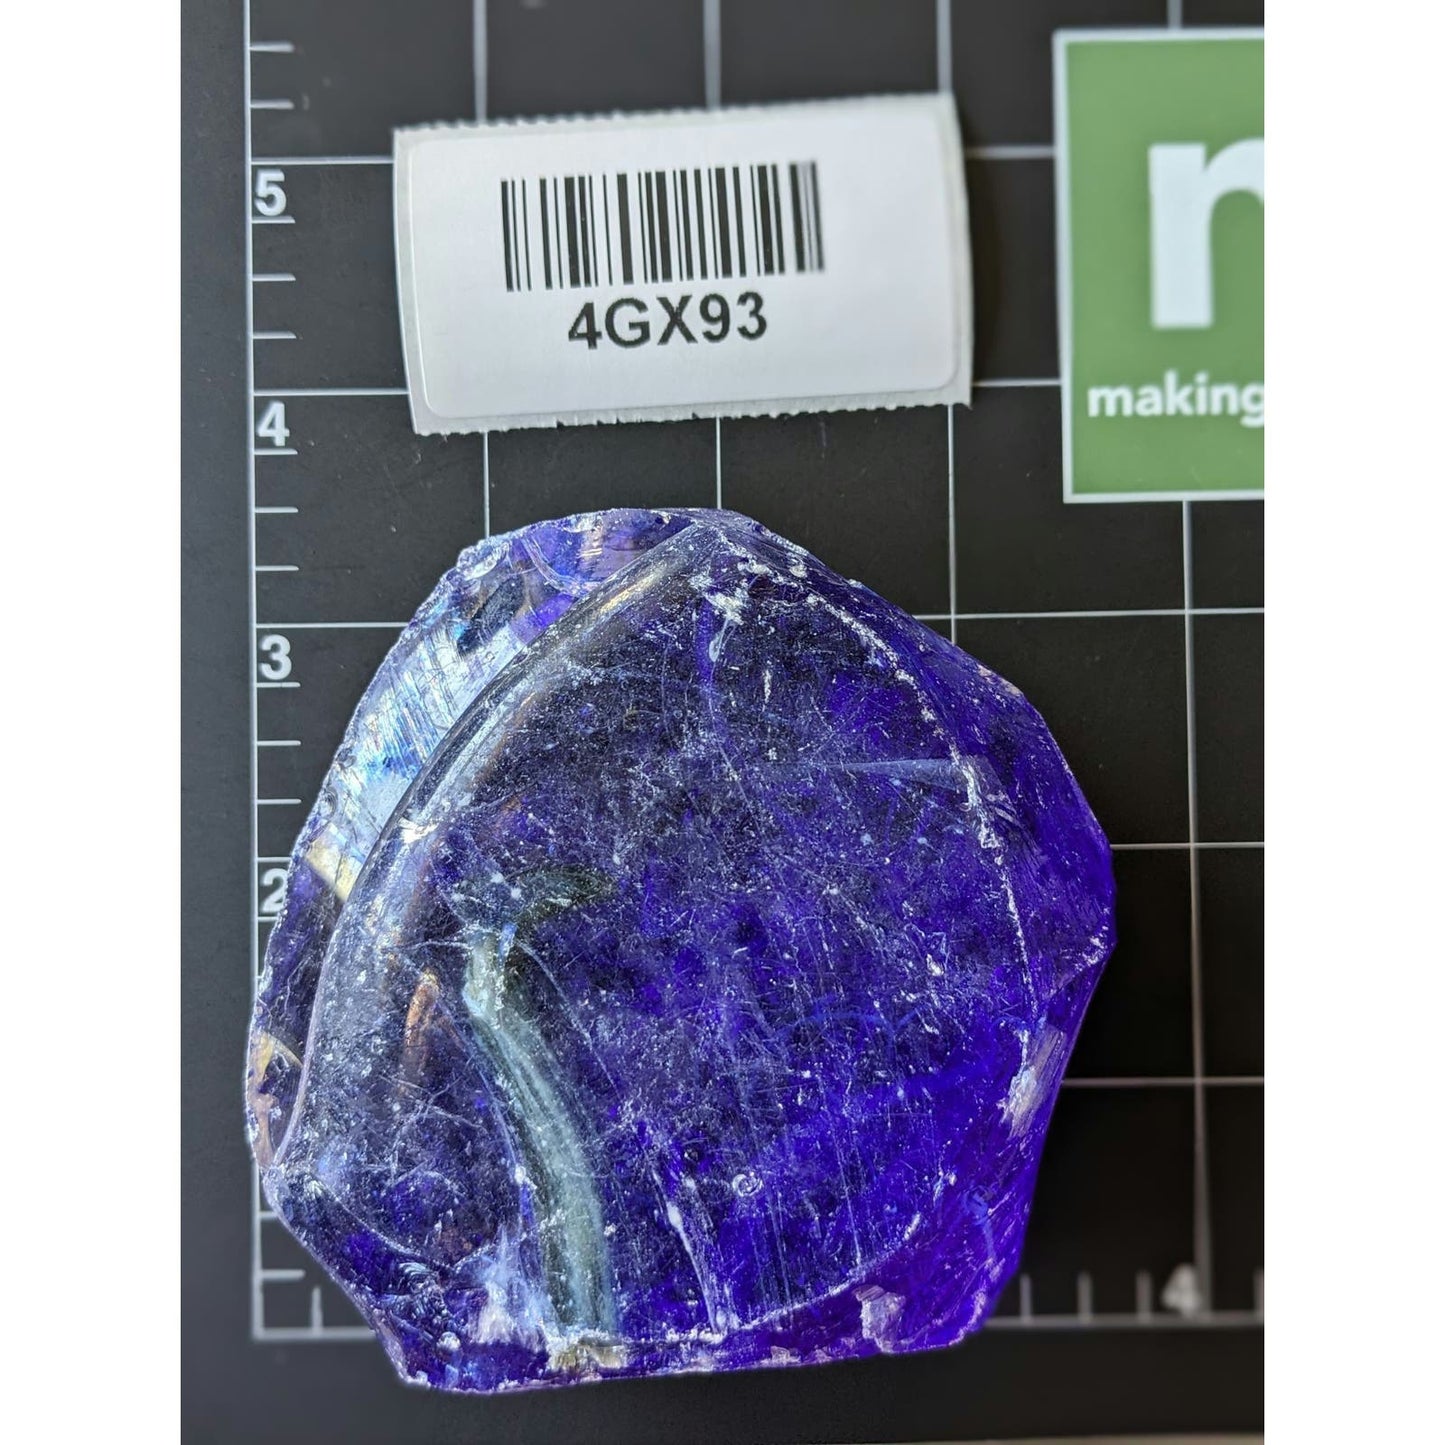 Cobalt Blue Art Glass Cullet Glowing Translucent Manganese Slag #4GX93